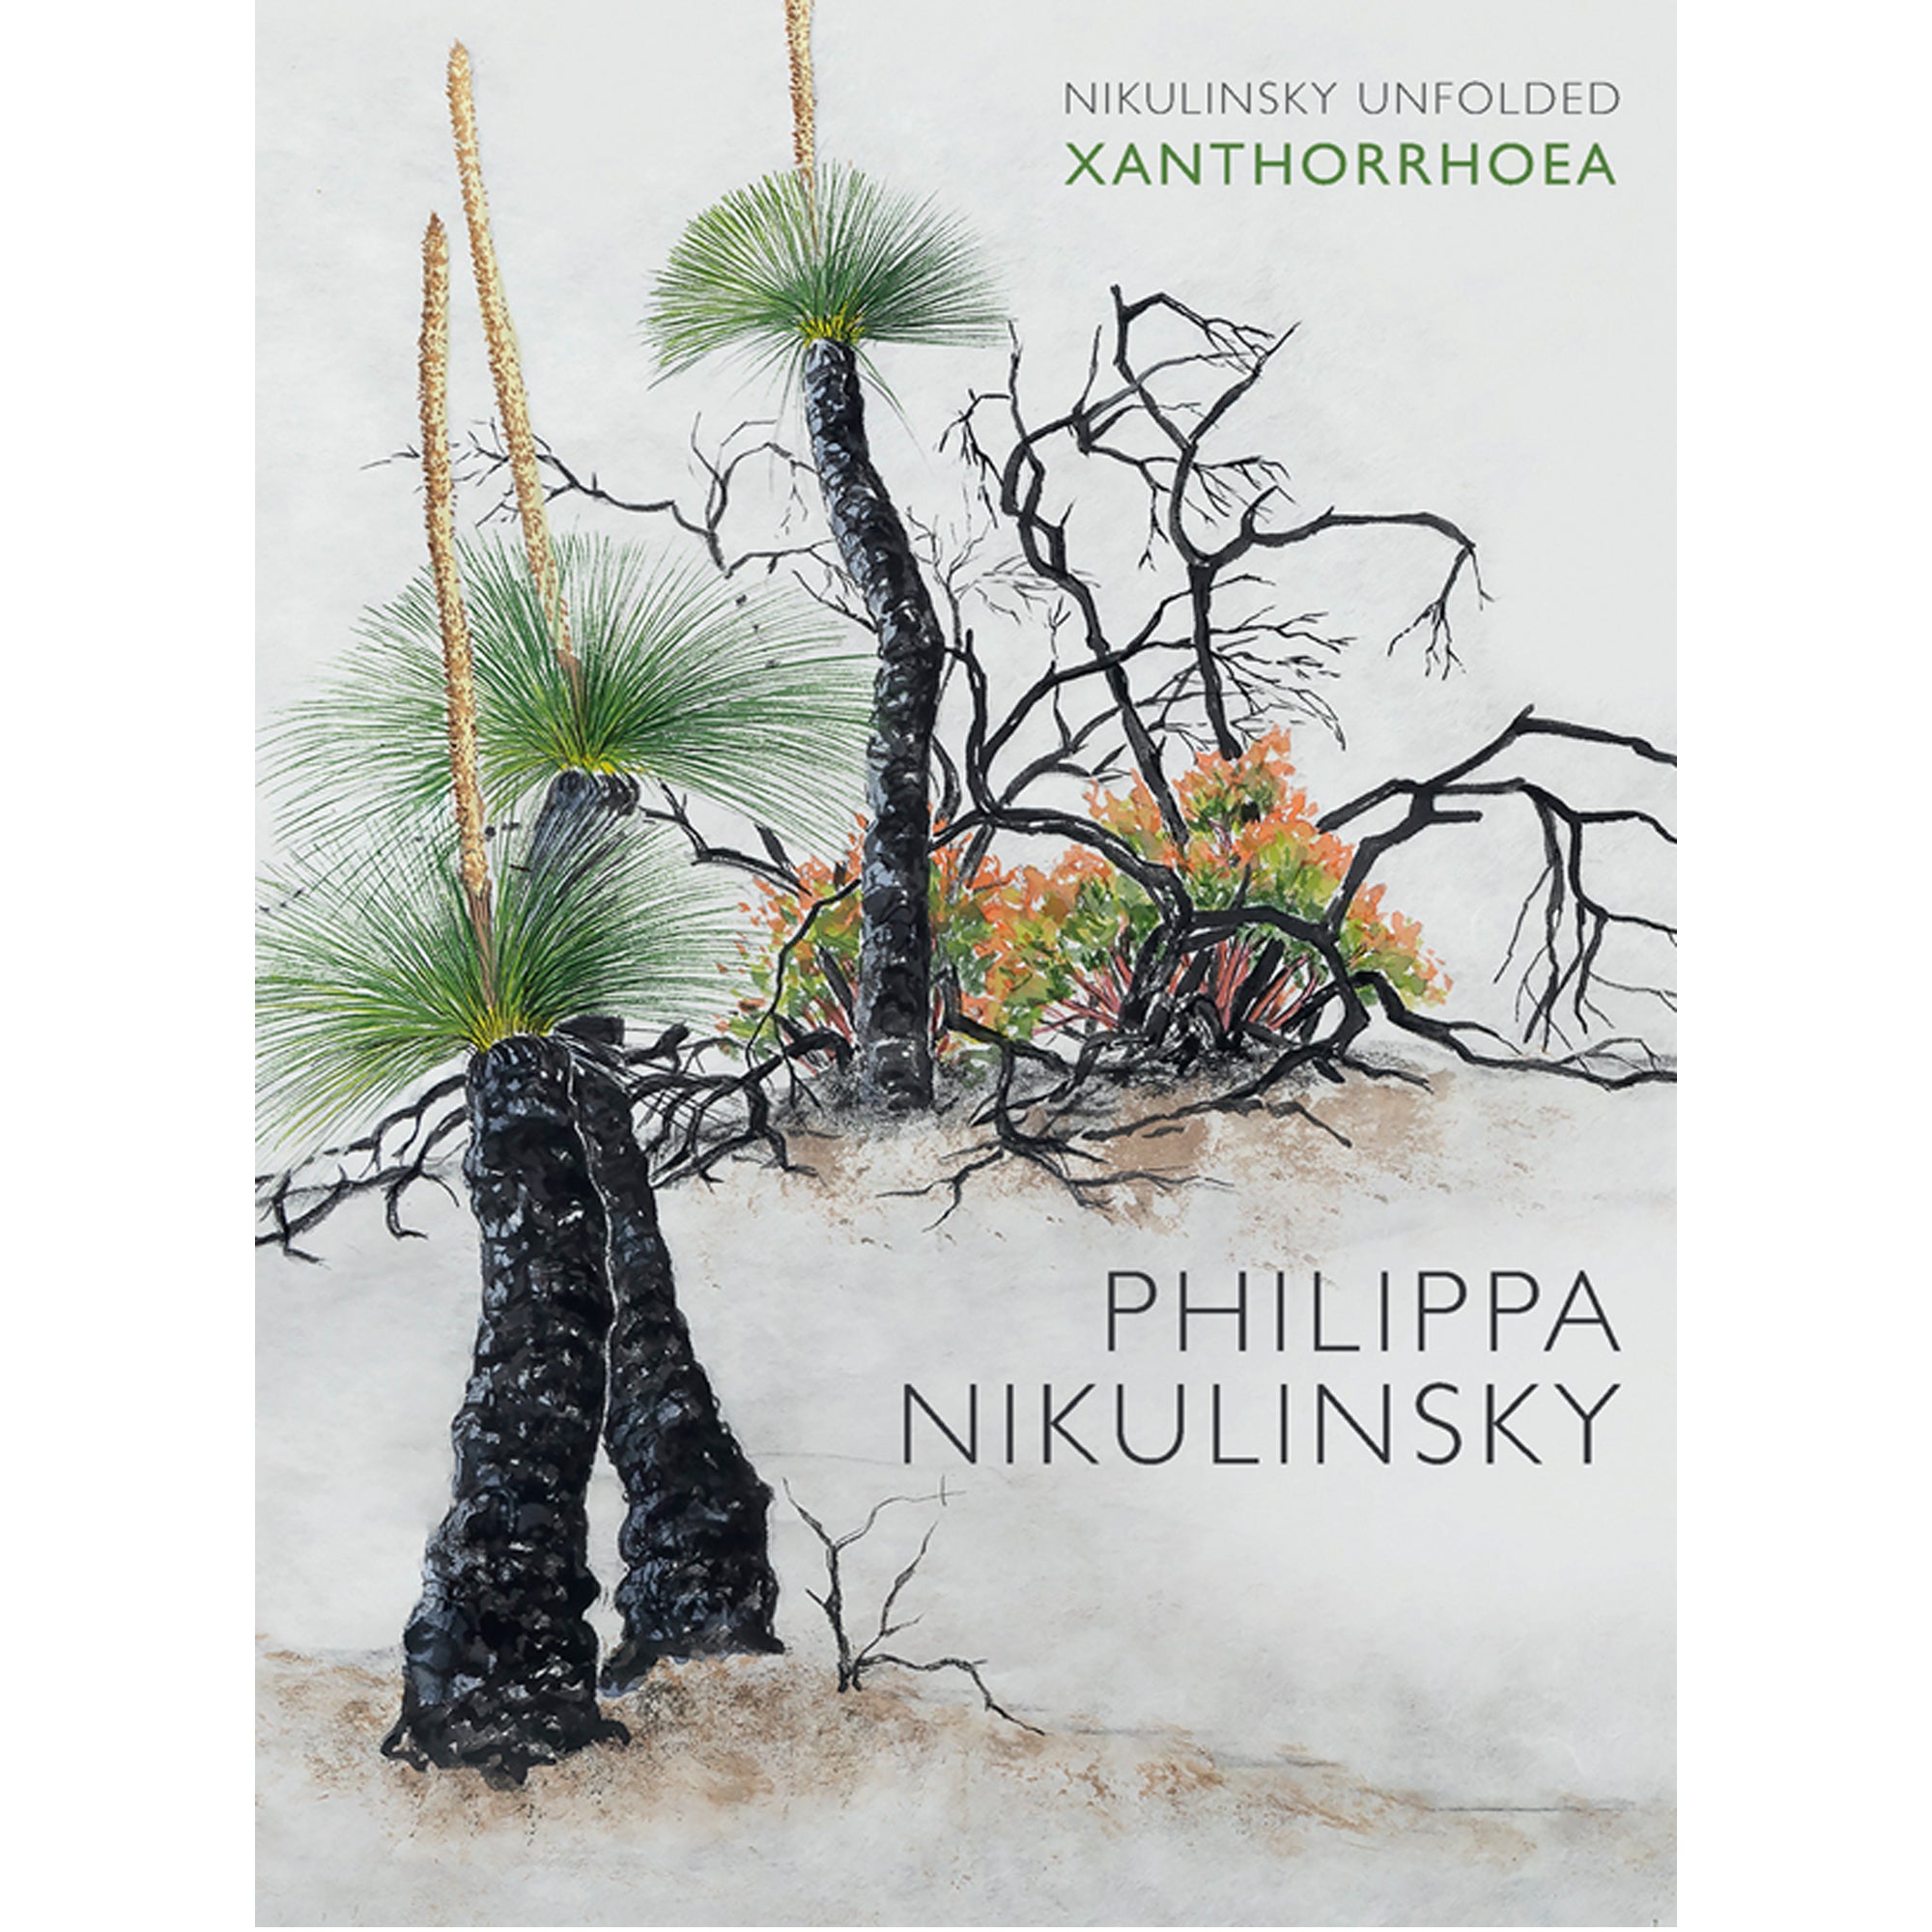 Philippa Nikulinski - 'Unfolded Xanthorrhoea' Hardcover Artist's Book (m/fac01)